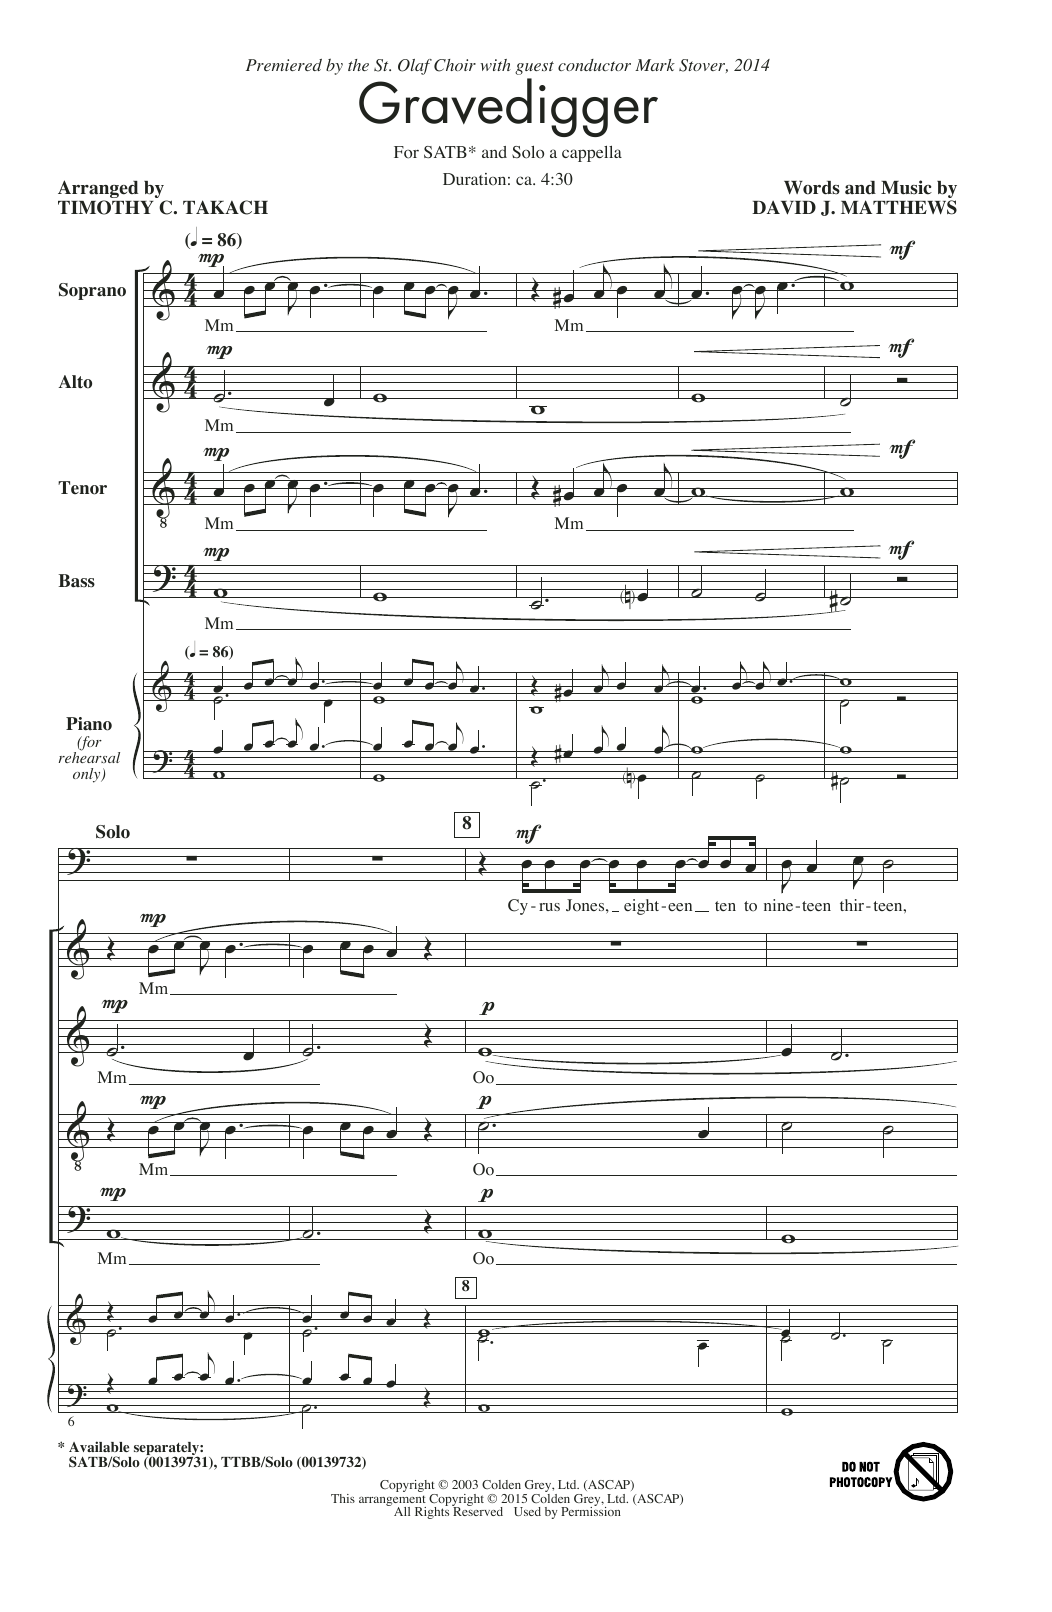 Dave Matthews Gravedigger (arr. Timothy C. Takach) Sheet Music Notes & Chords for SATB - Download or Print PDF